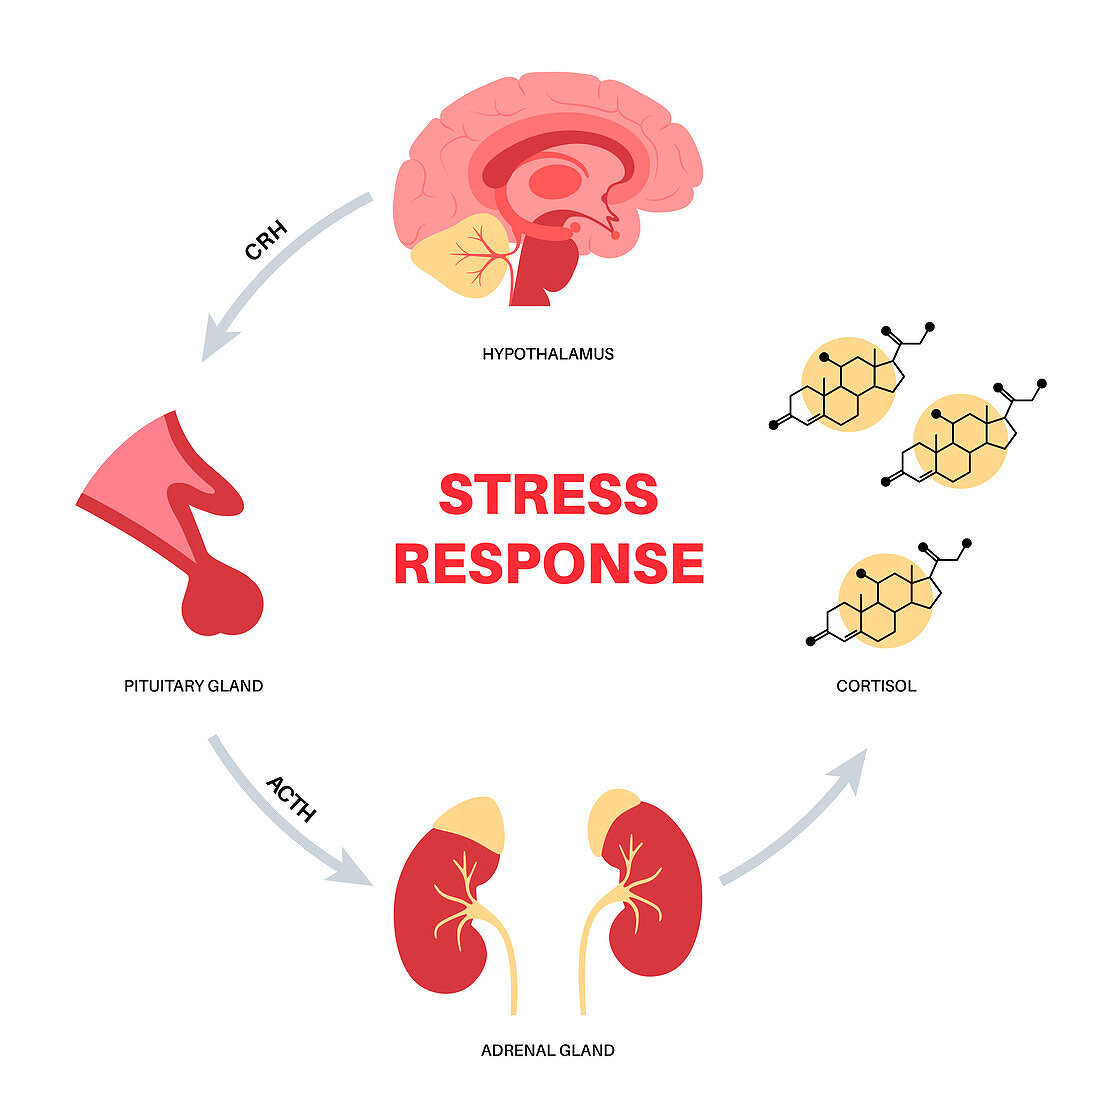 Stress response, illustration